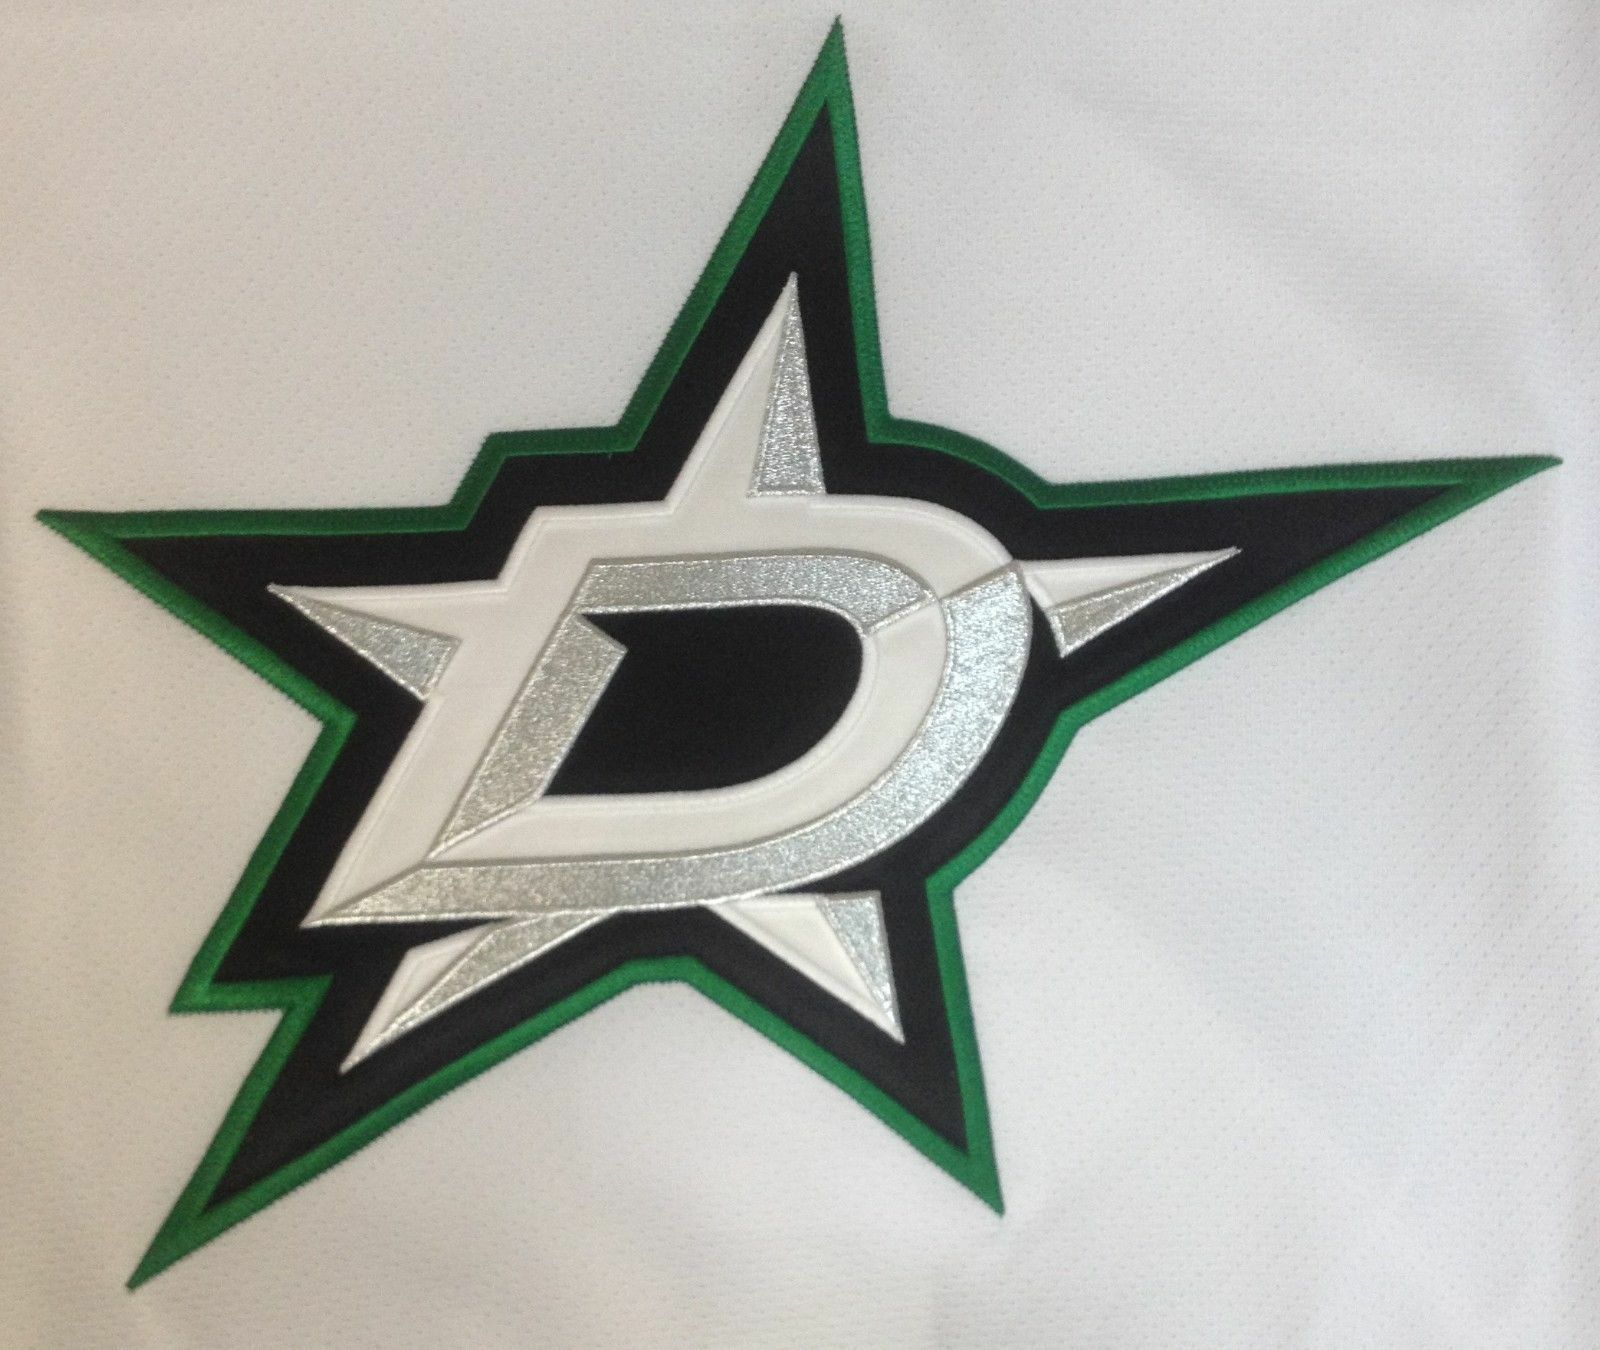 DALLAS STARS reebok NHL authentic EDGE 1.0 hockey jersey away-white size 56 NEW Image 6